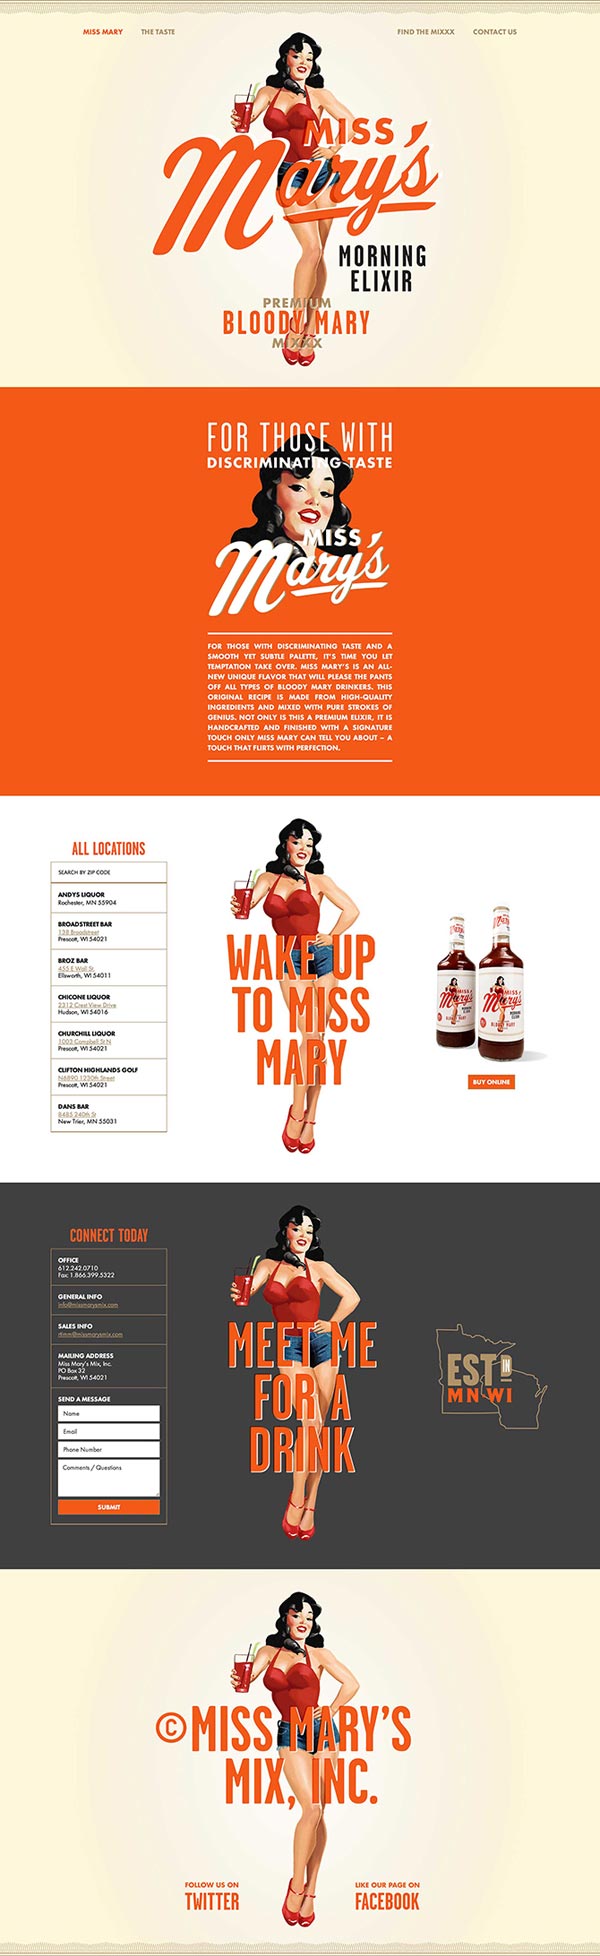 Miss Mary's Morning Elixir - Web Design by Brandon Van Liere